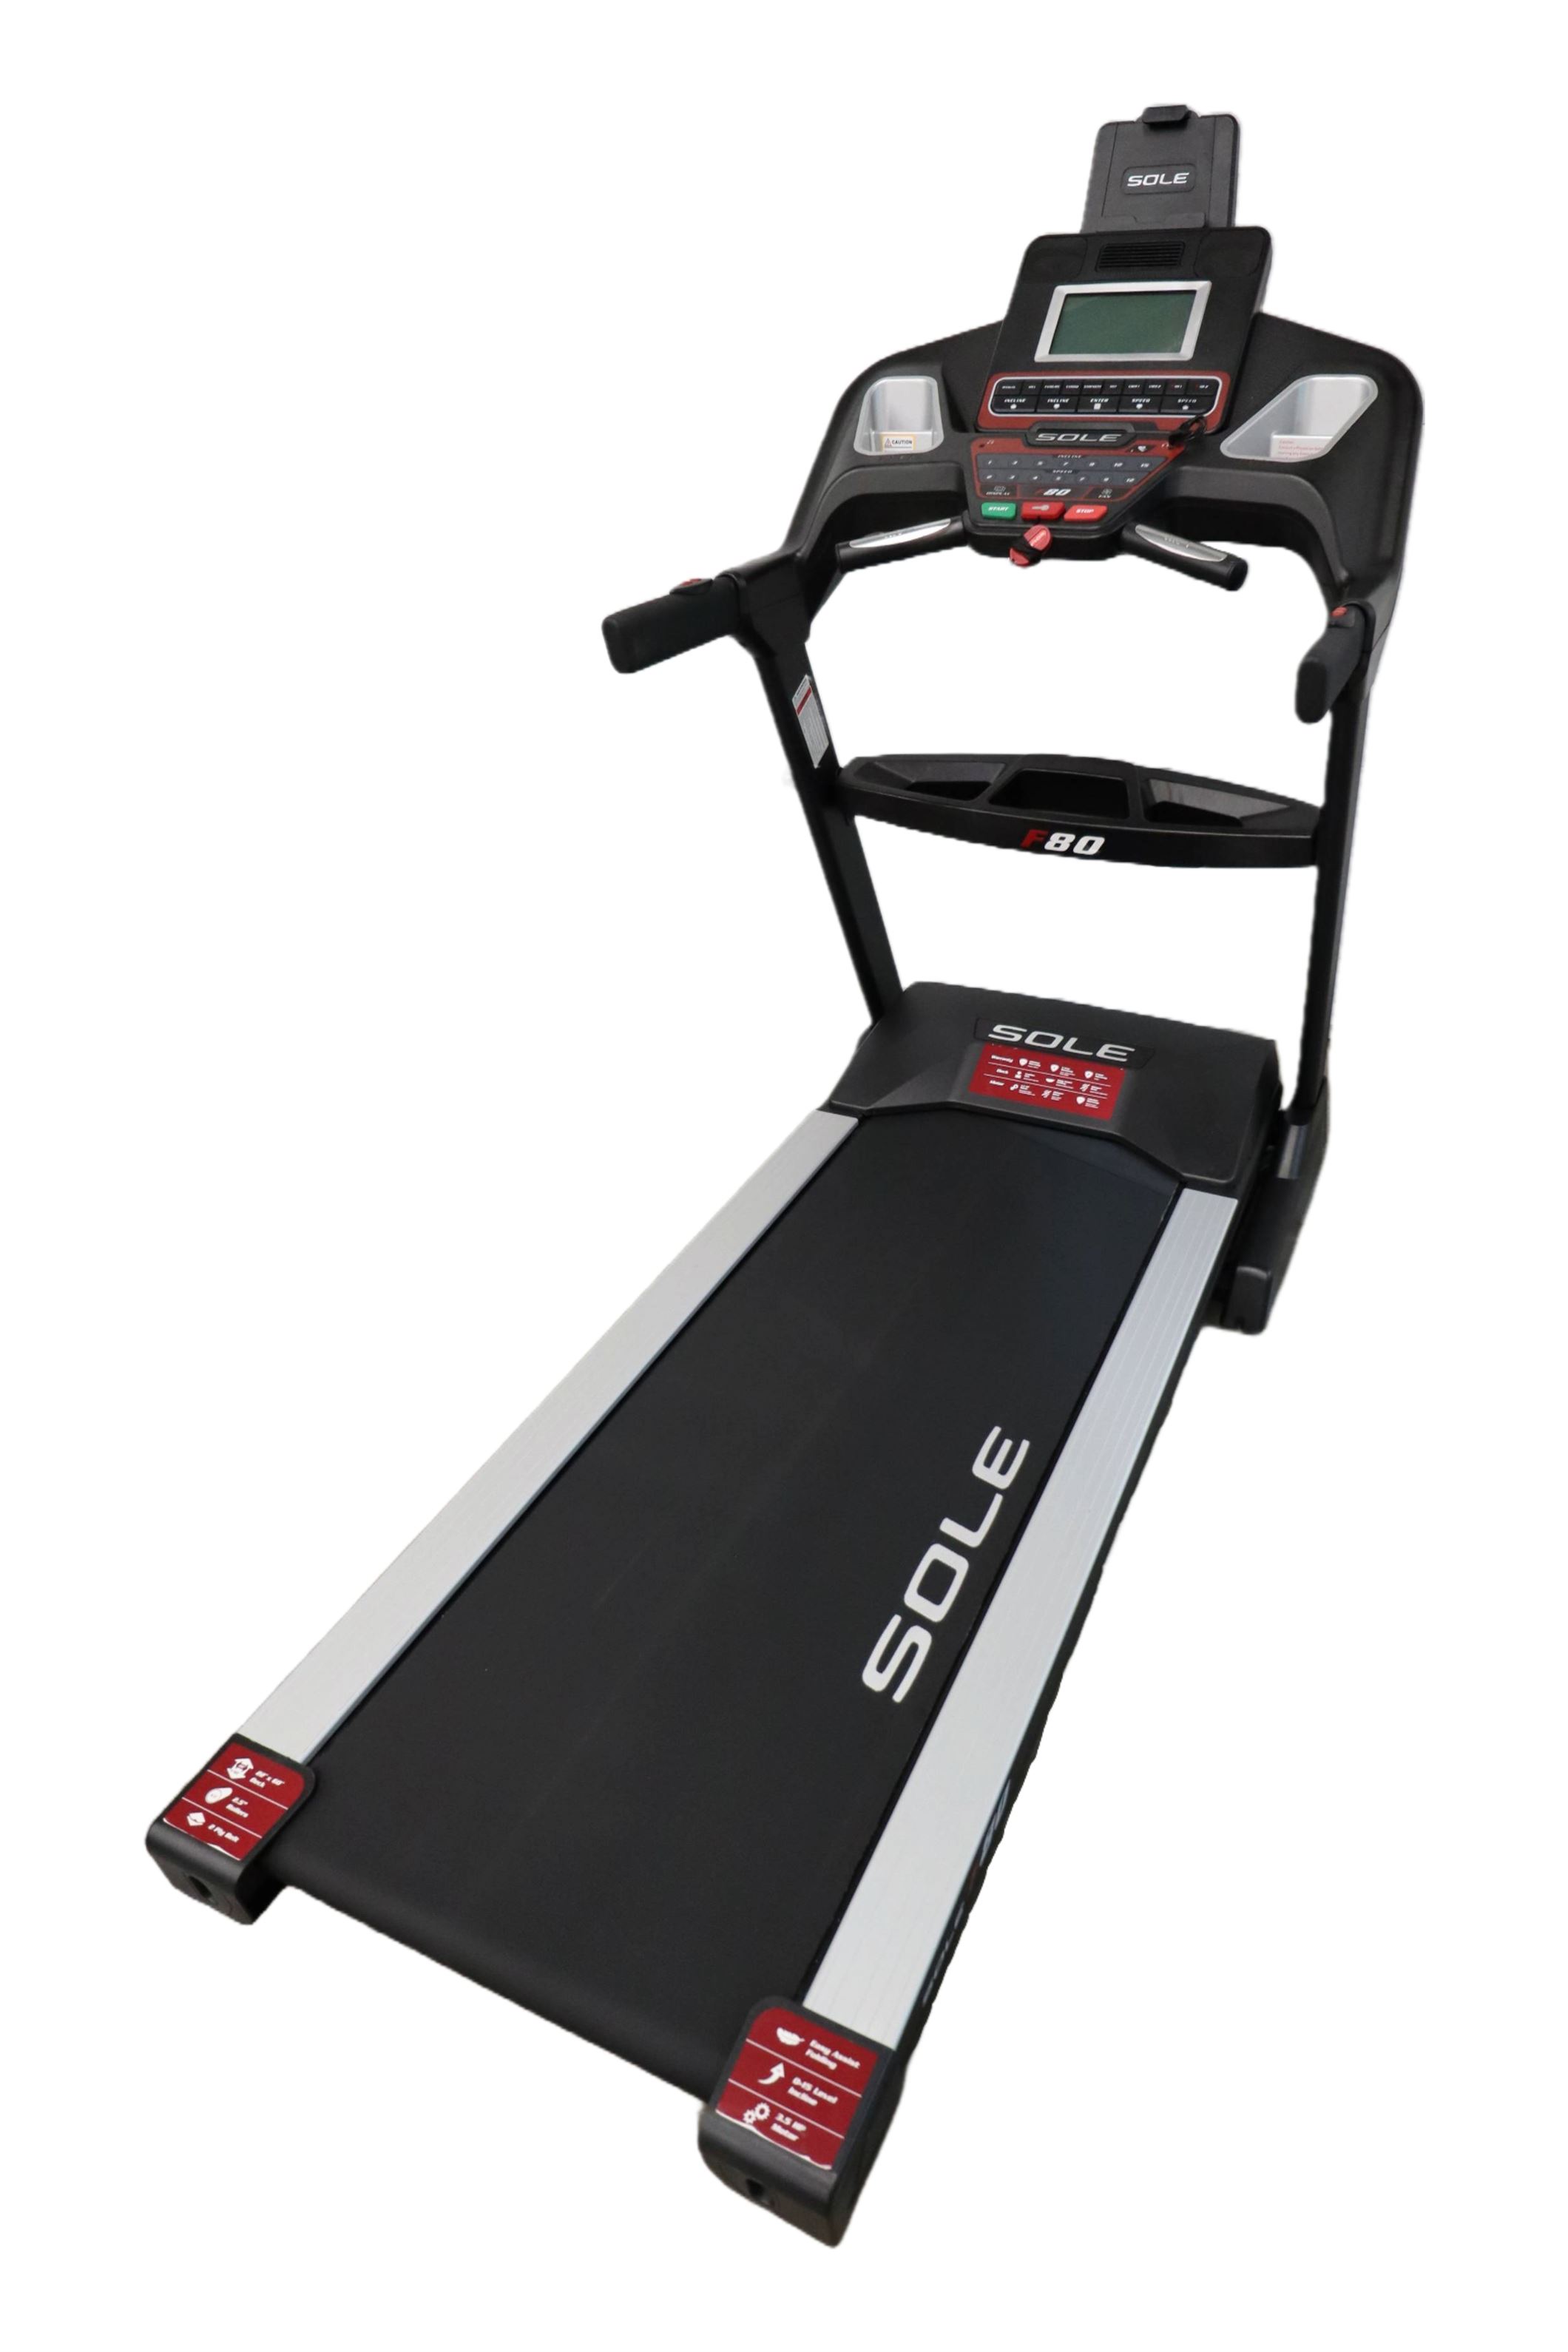 Used Sole F80 580818 Folding Treadmill